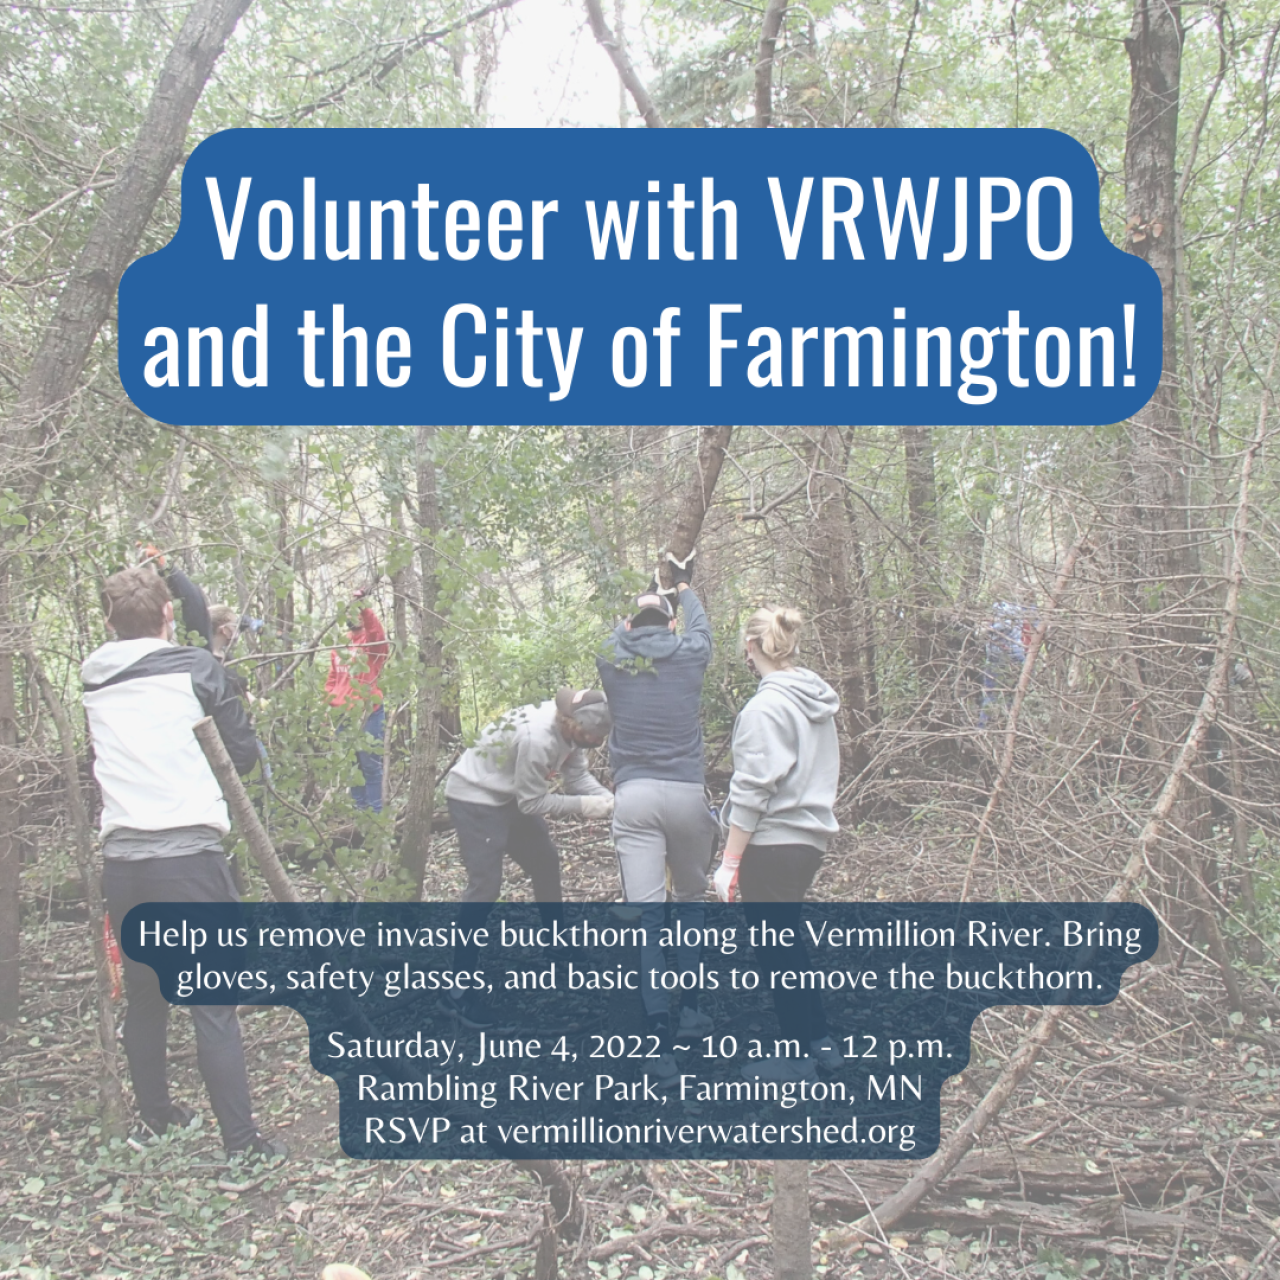 Volunteer with VRWJPO and the City of Farmington